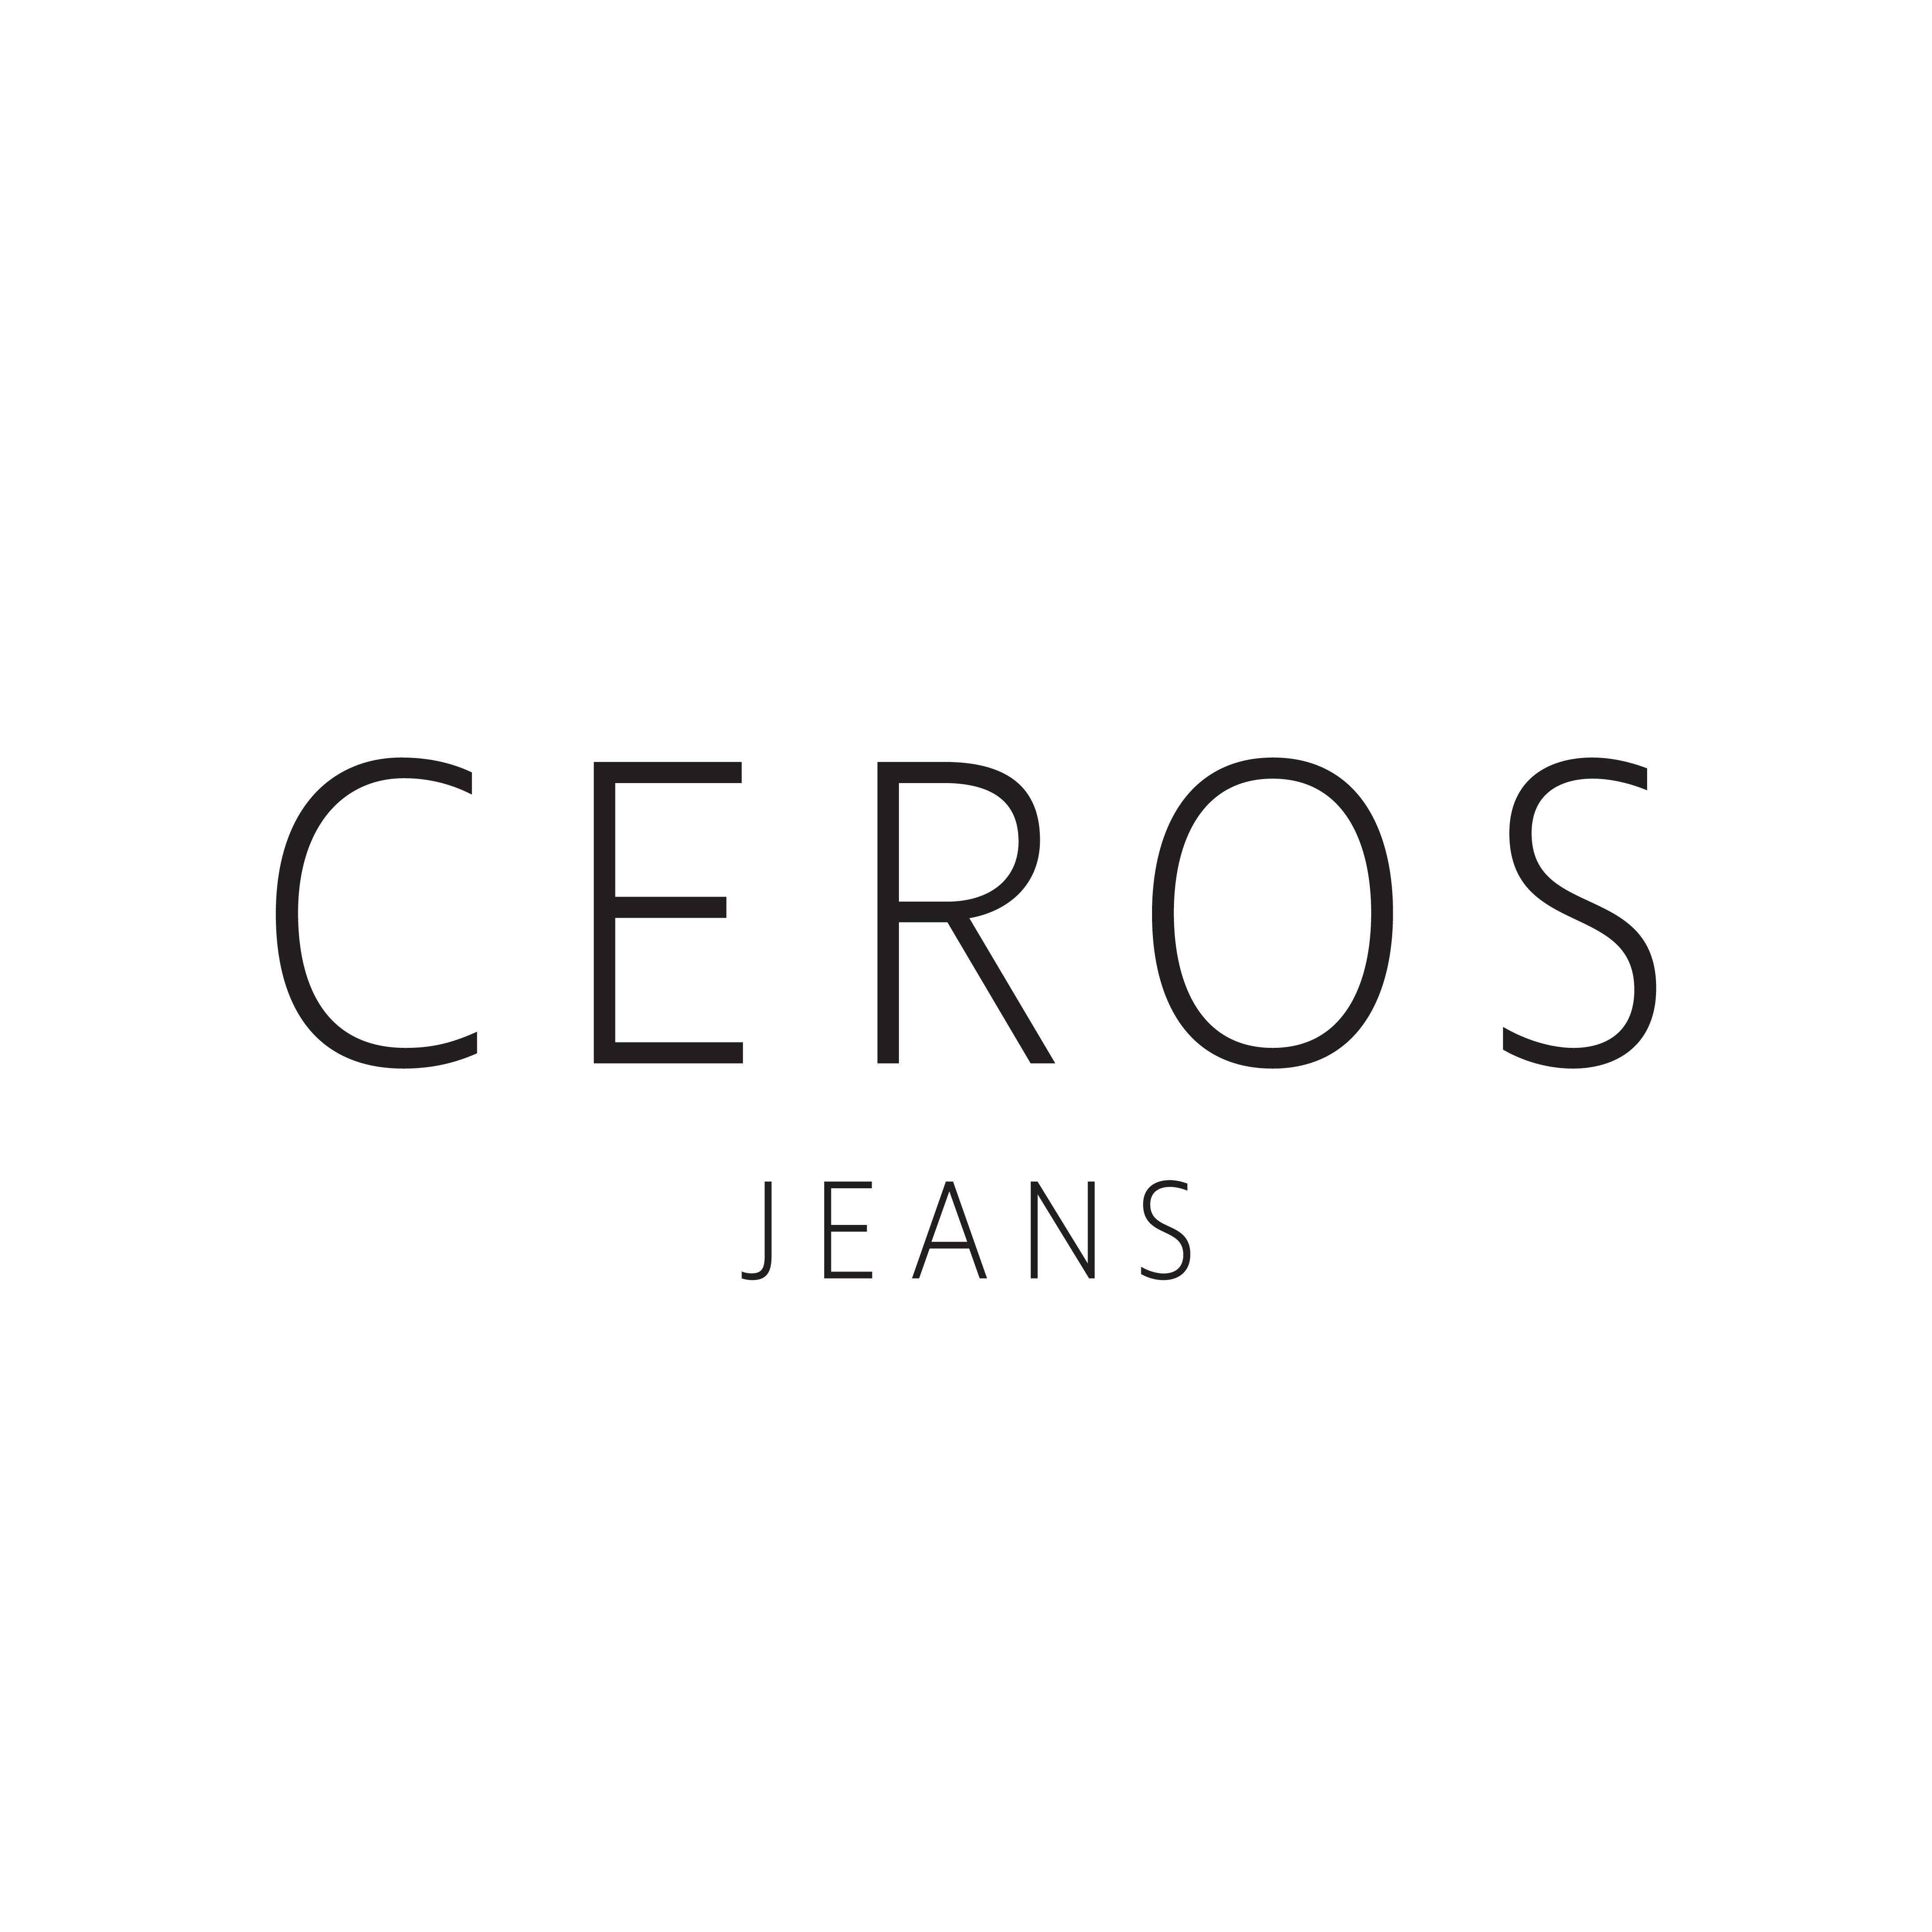 Ceros Jeans wholesale products